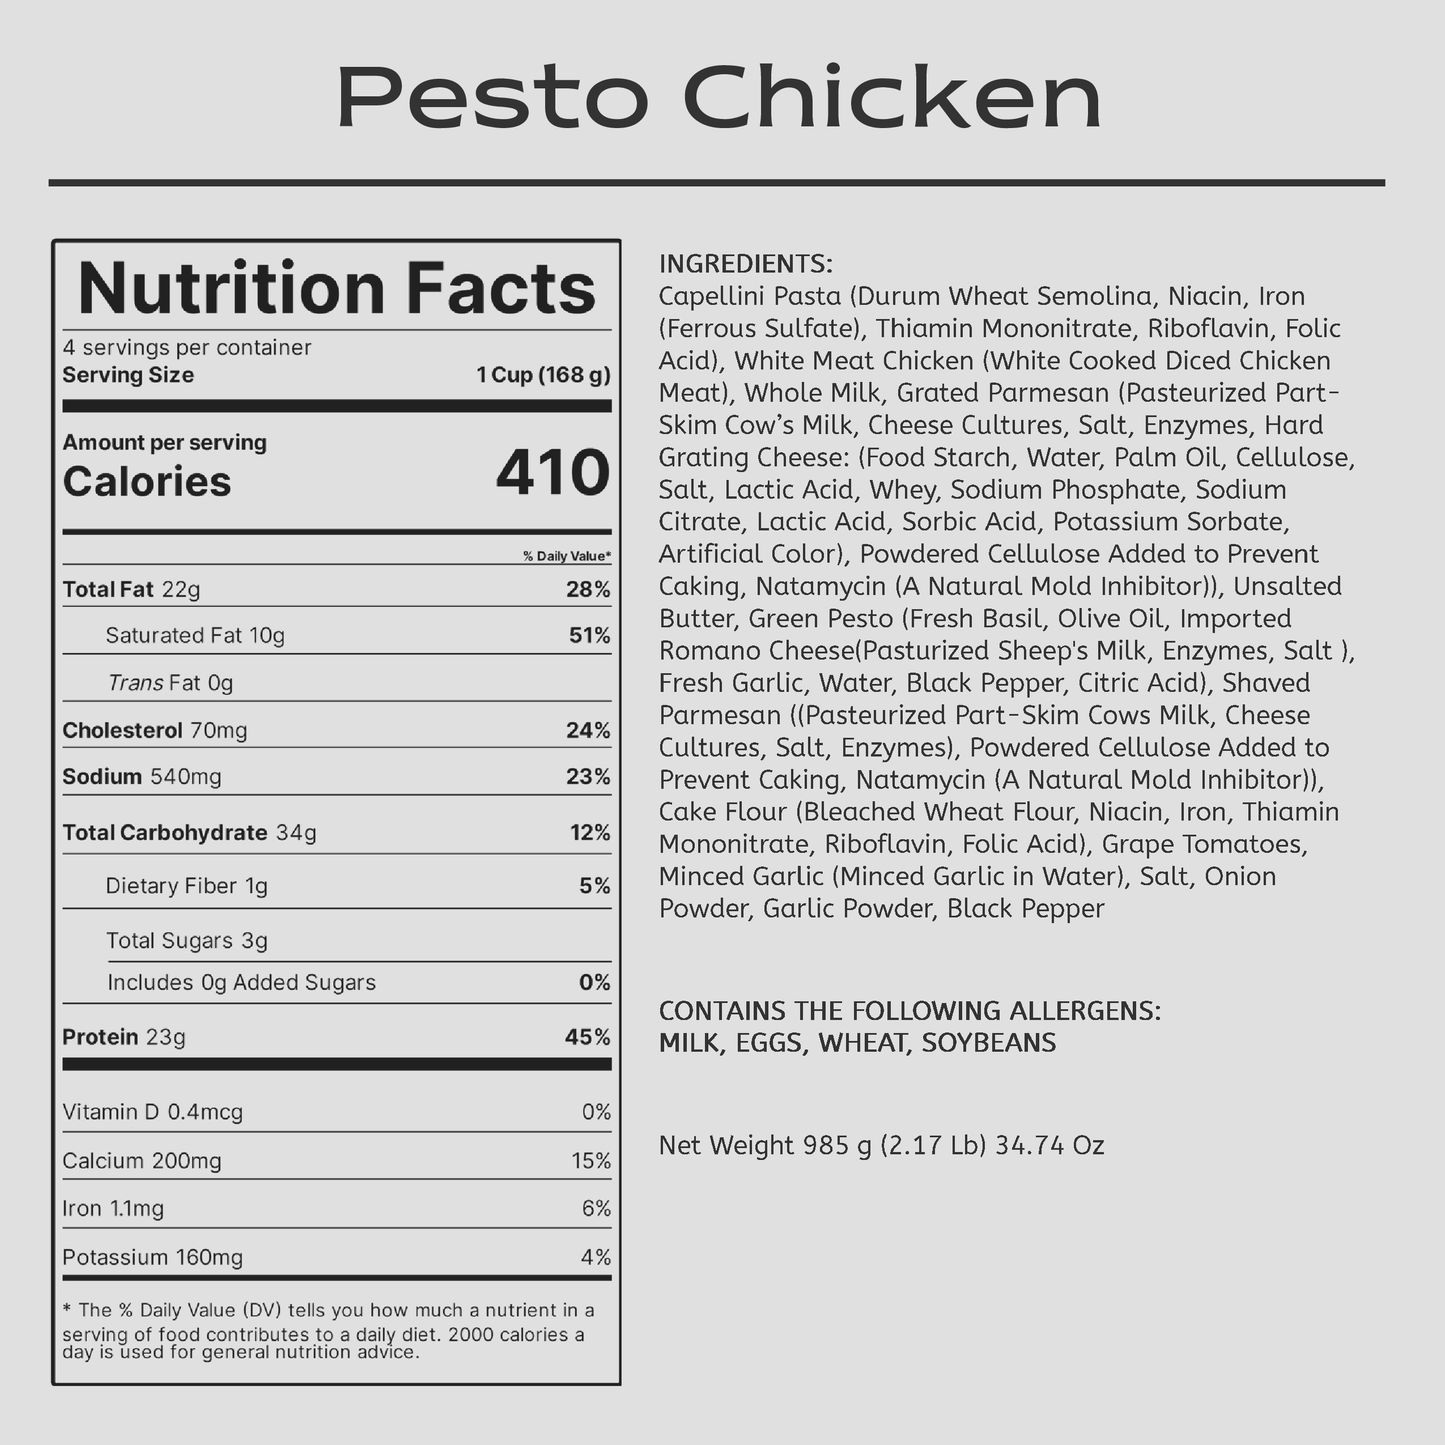 Pesto Chicken